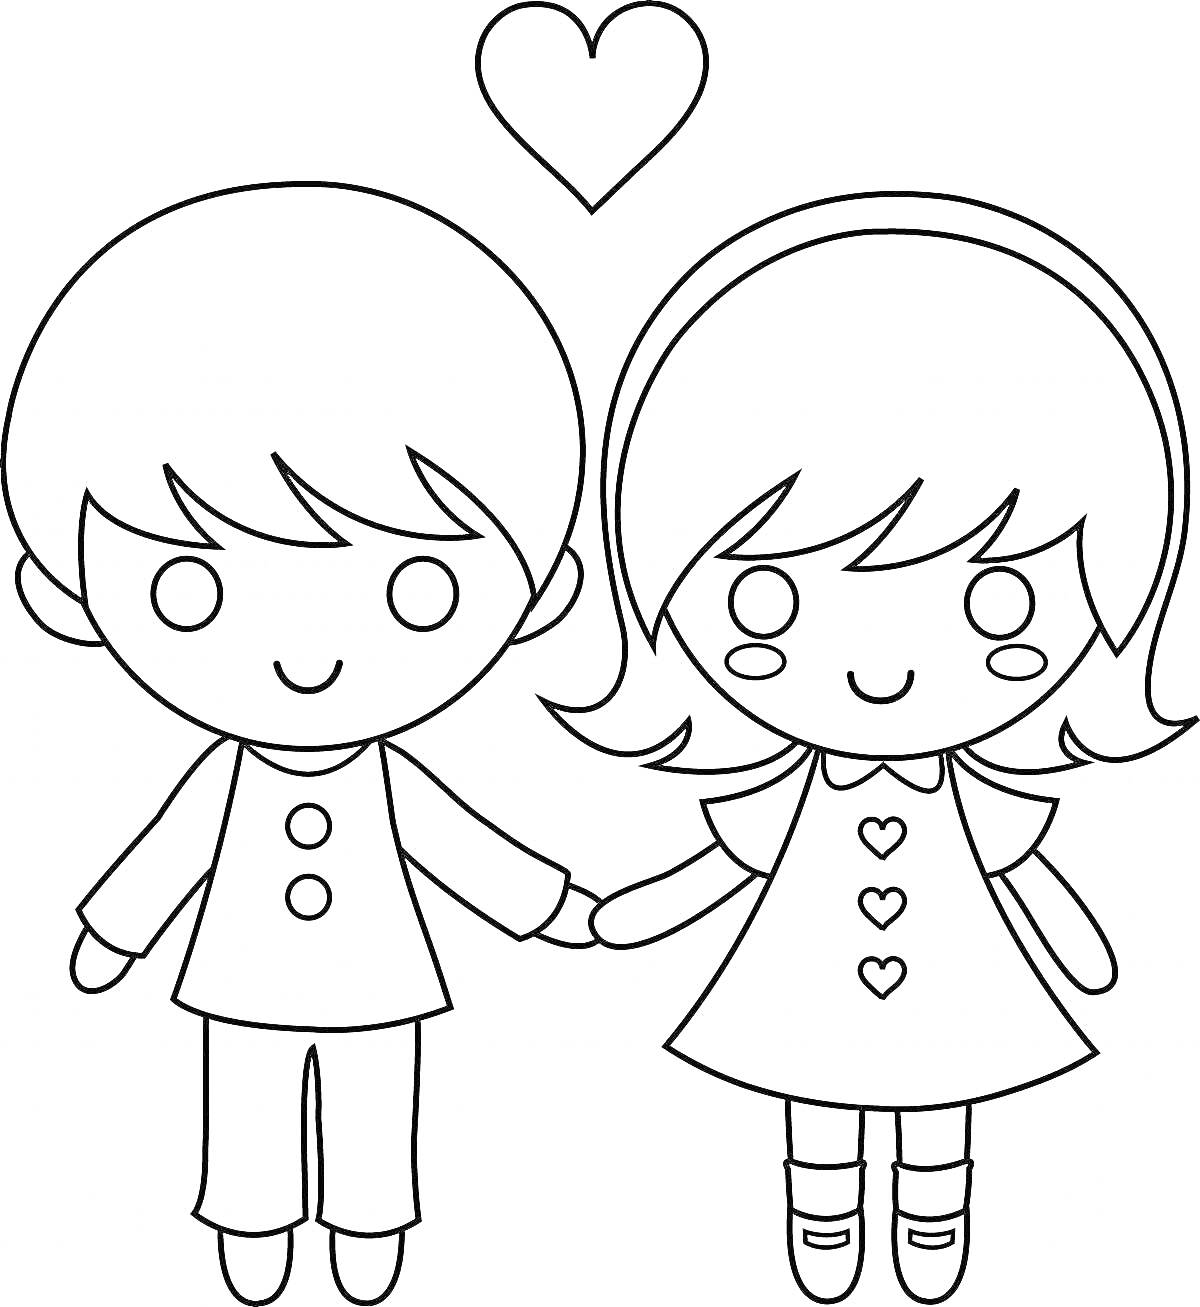 Раскраска Два ребенка держатся за руки, сердце над ними.